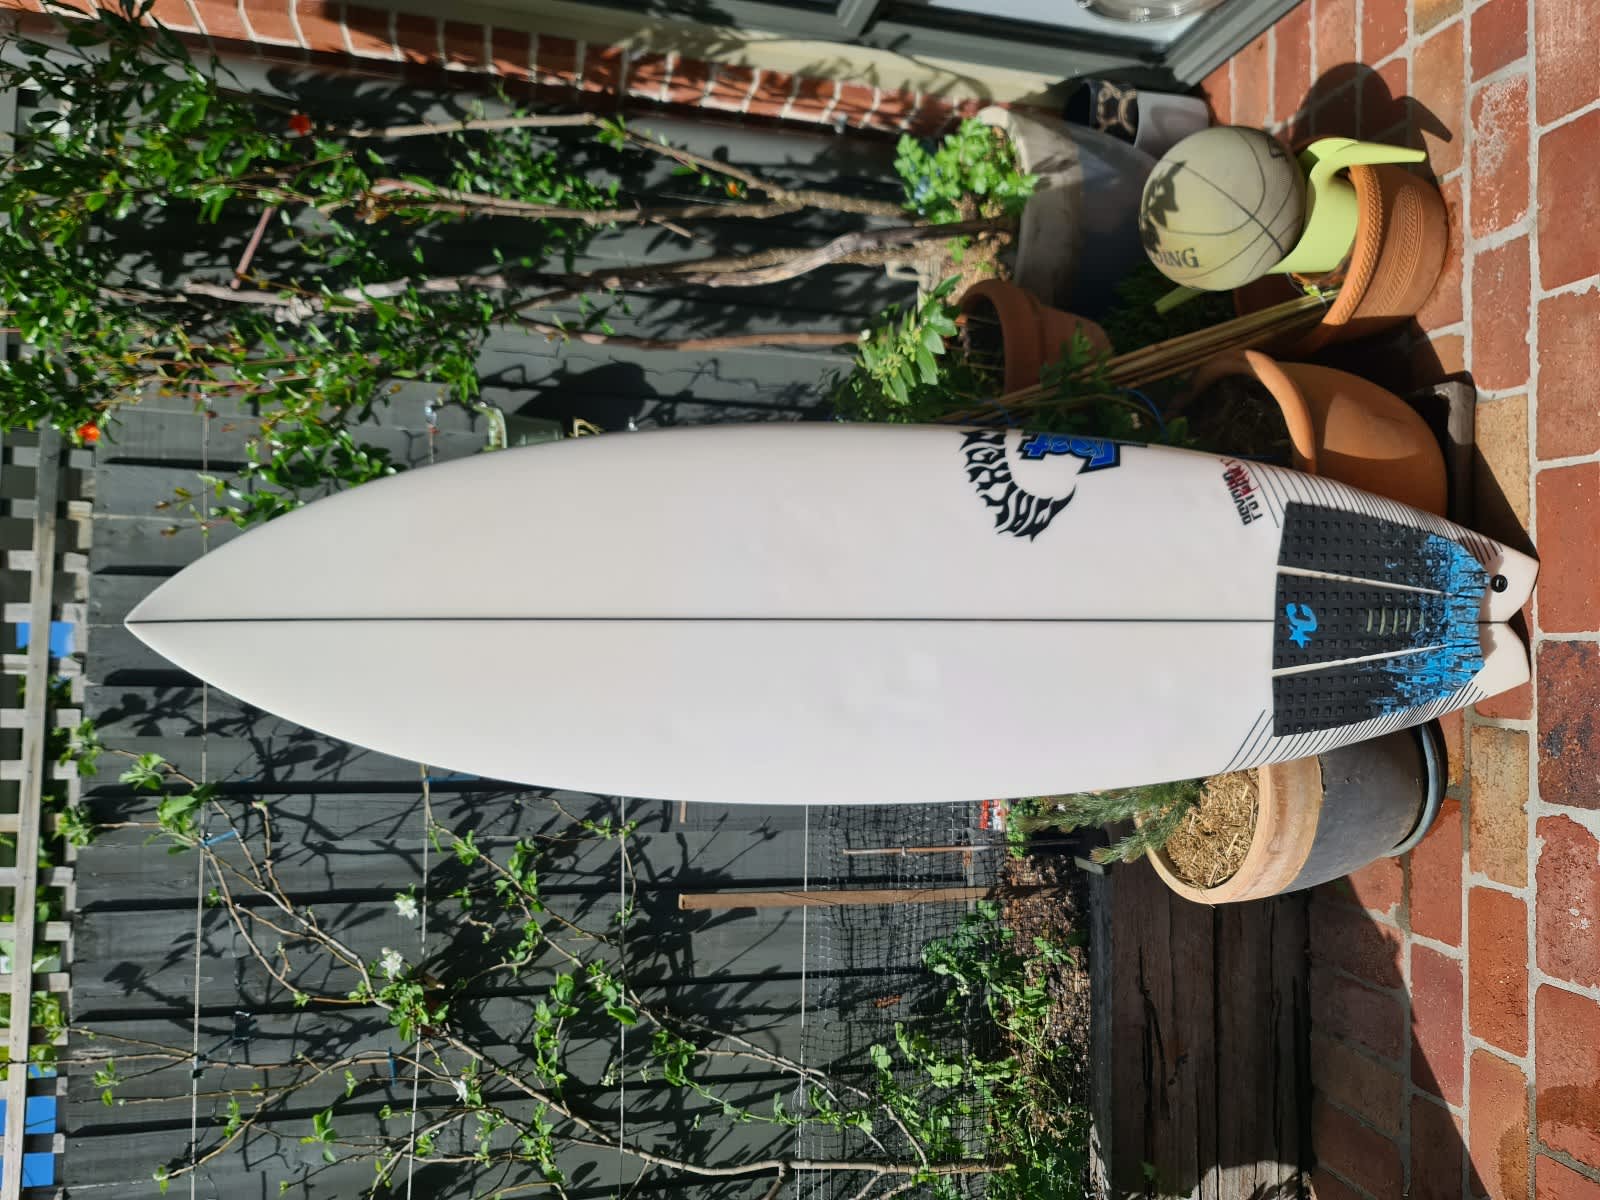 lost surfboard | Surfing | Gumtree Australia Free Local Classifieds